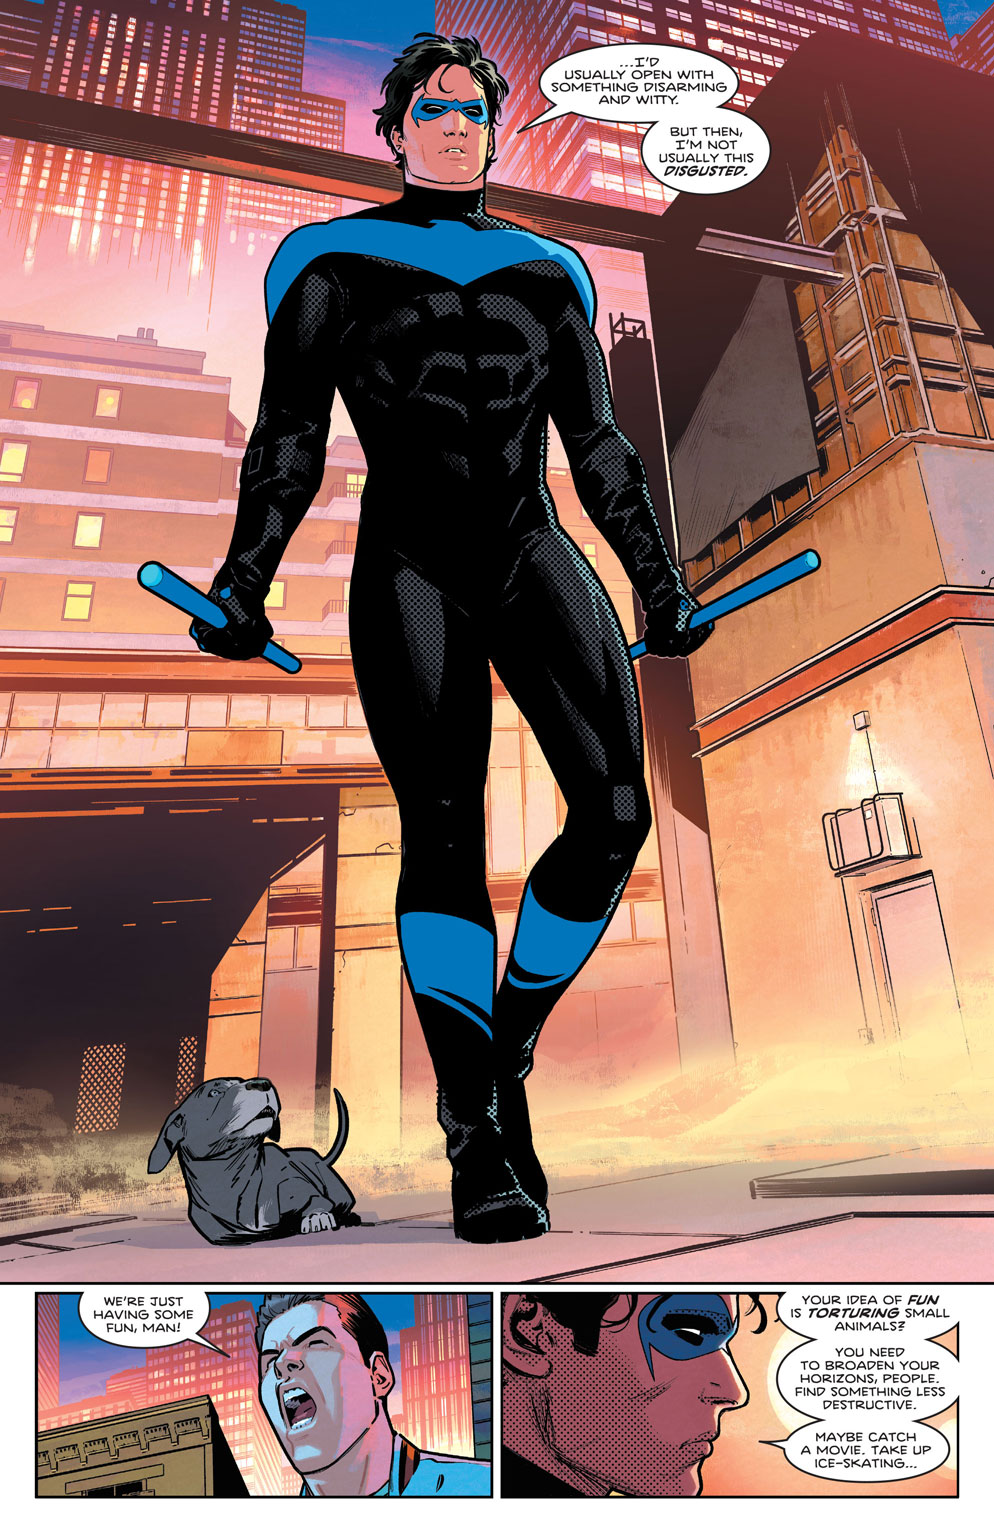 Nightwing #78